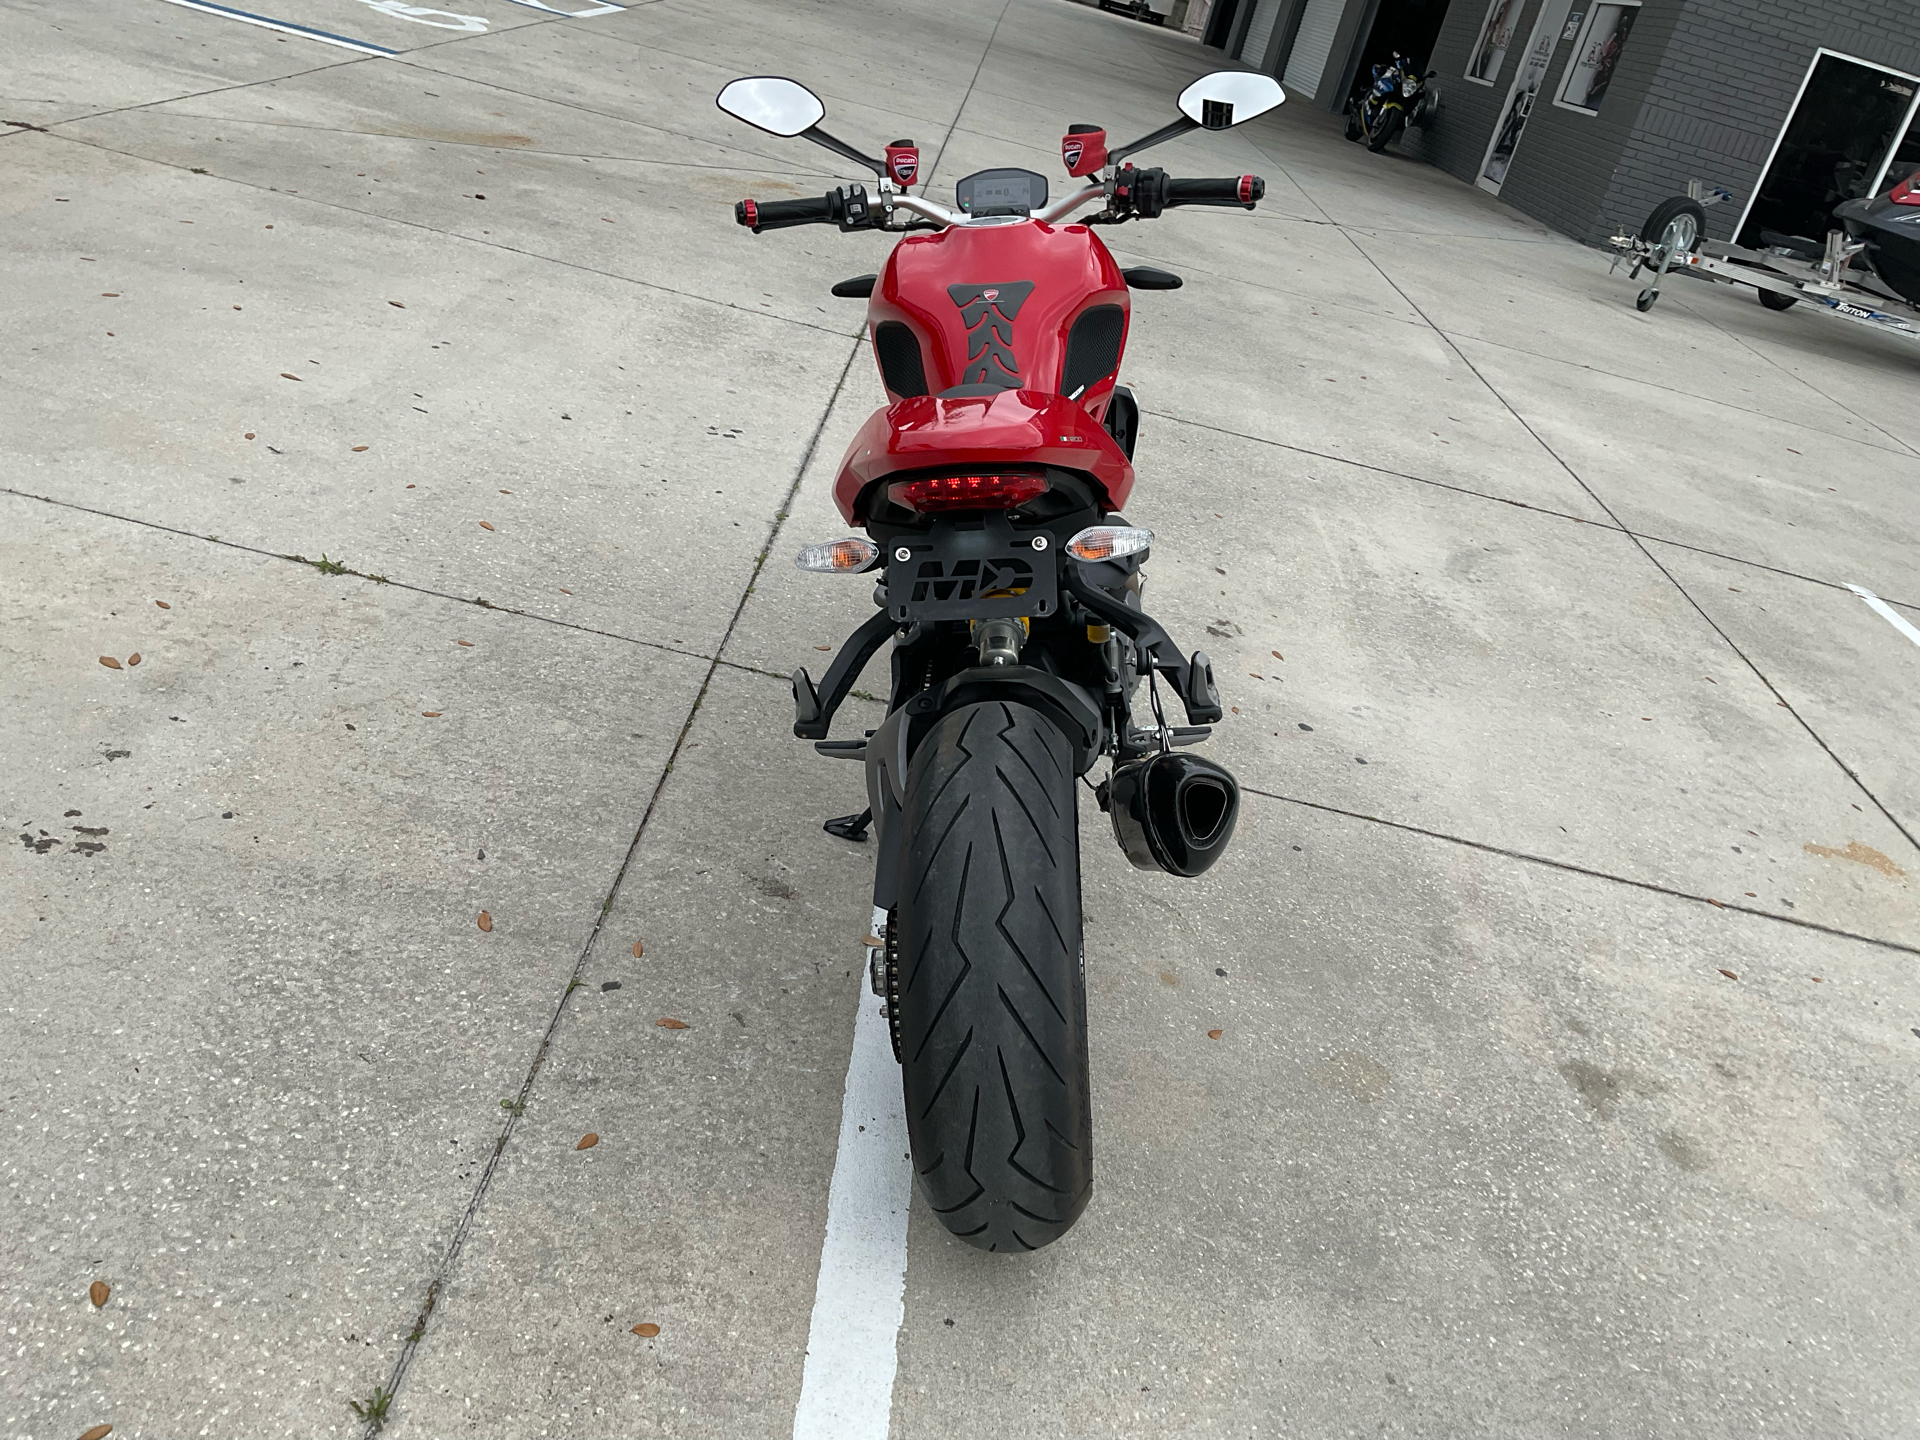 2020 Ducati Monster 1200 in Melbourne, Florida - Photo 9